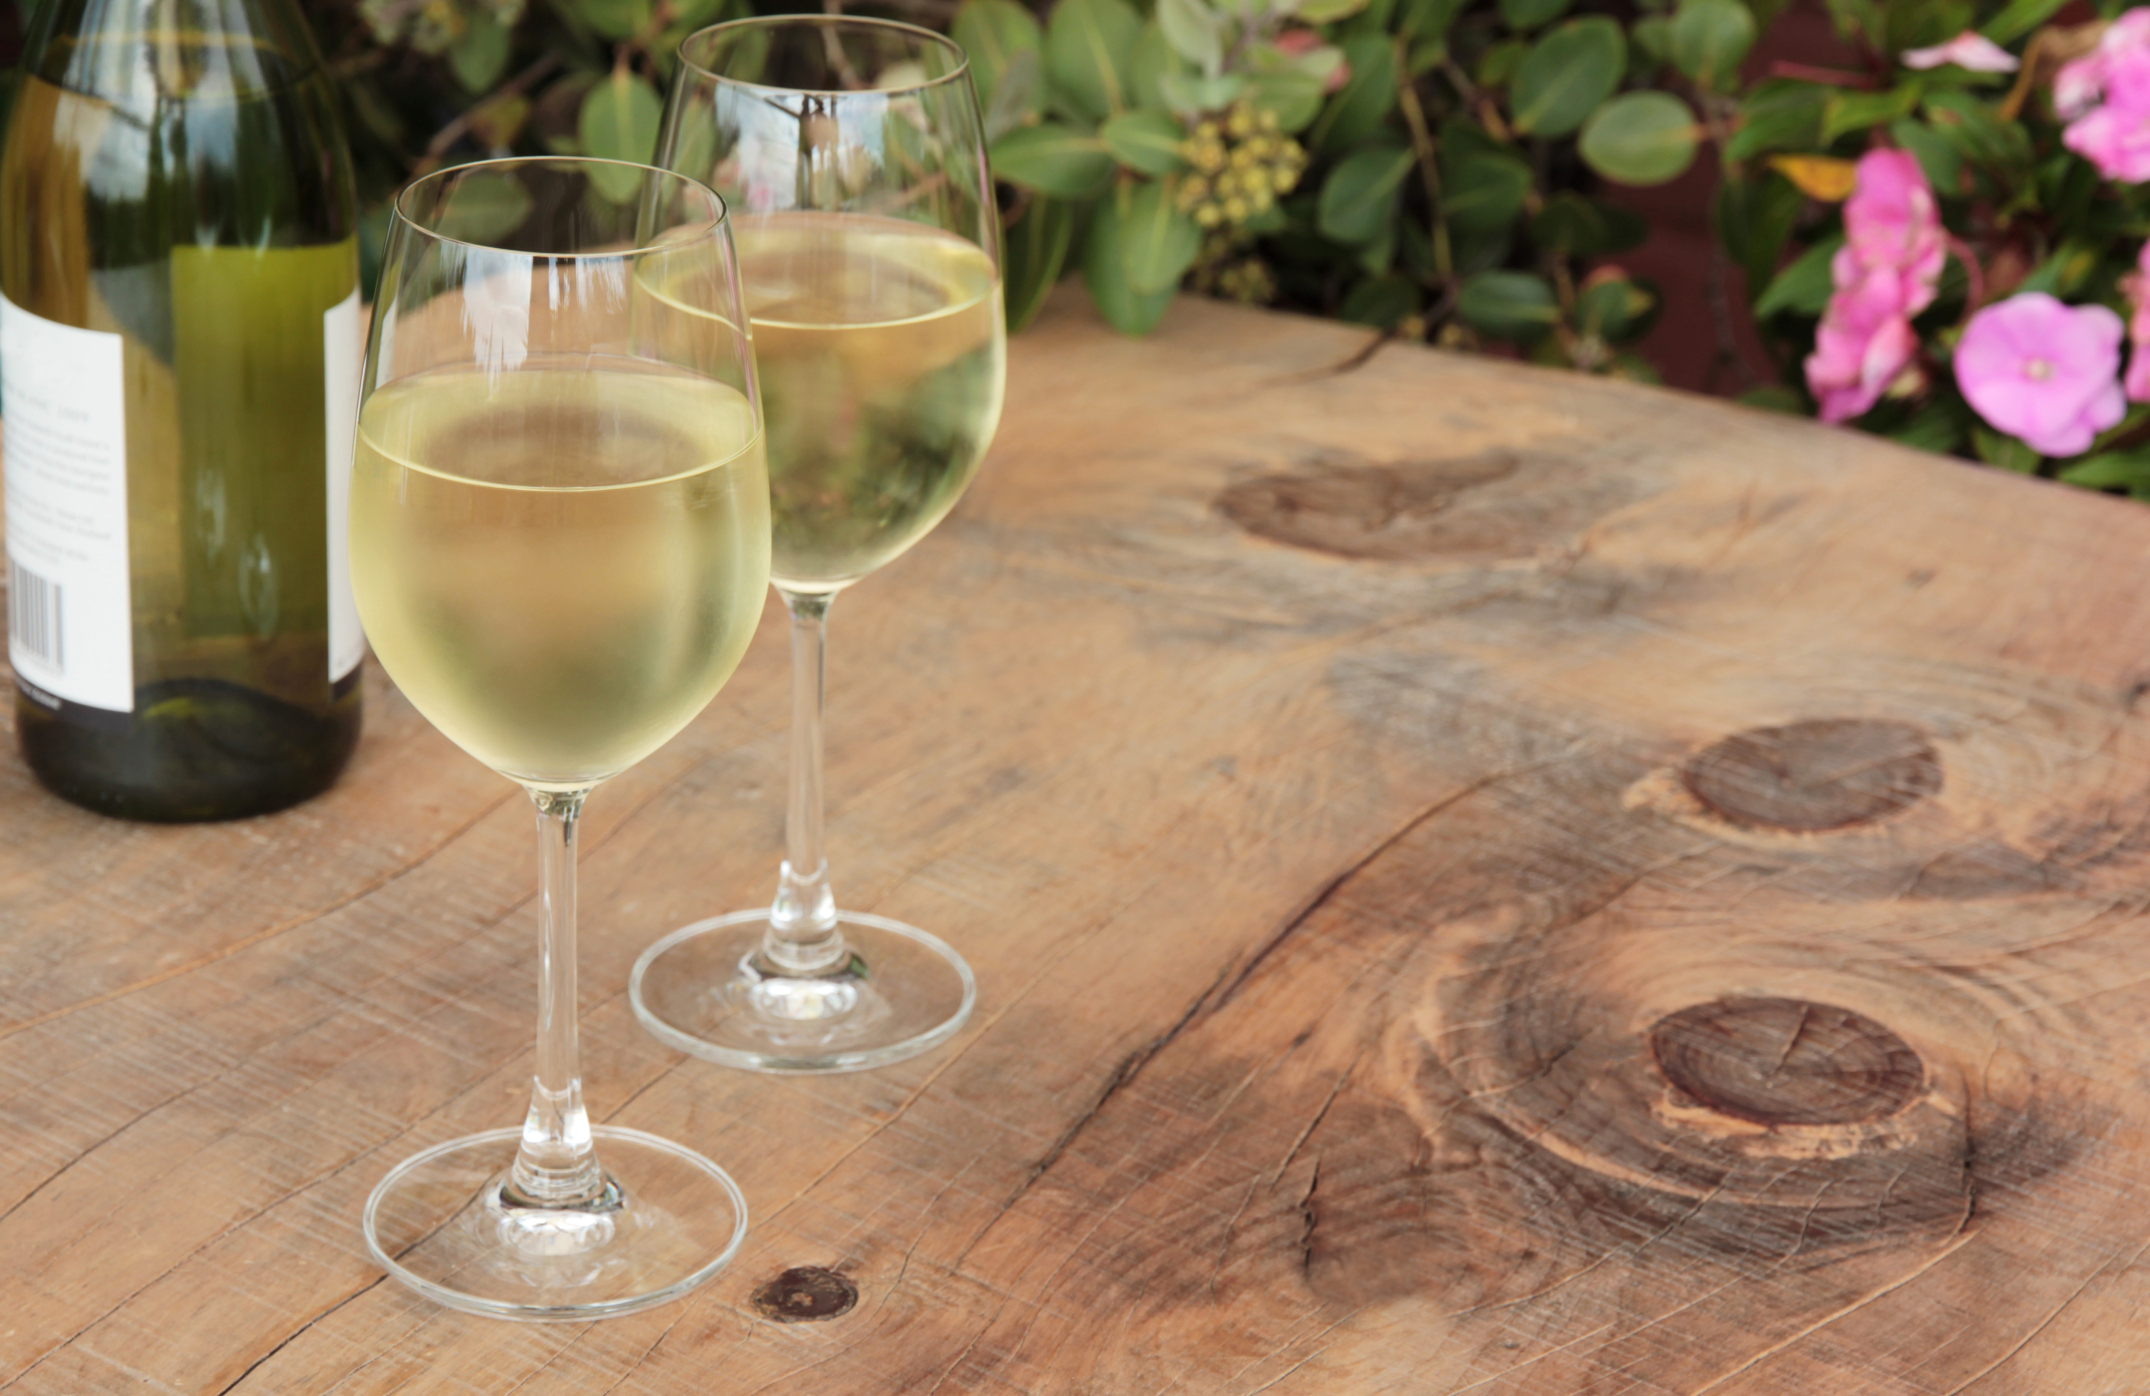 Memorial Day marks the beginning of summer wine season